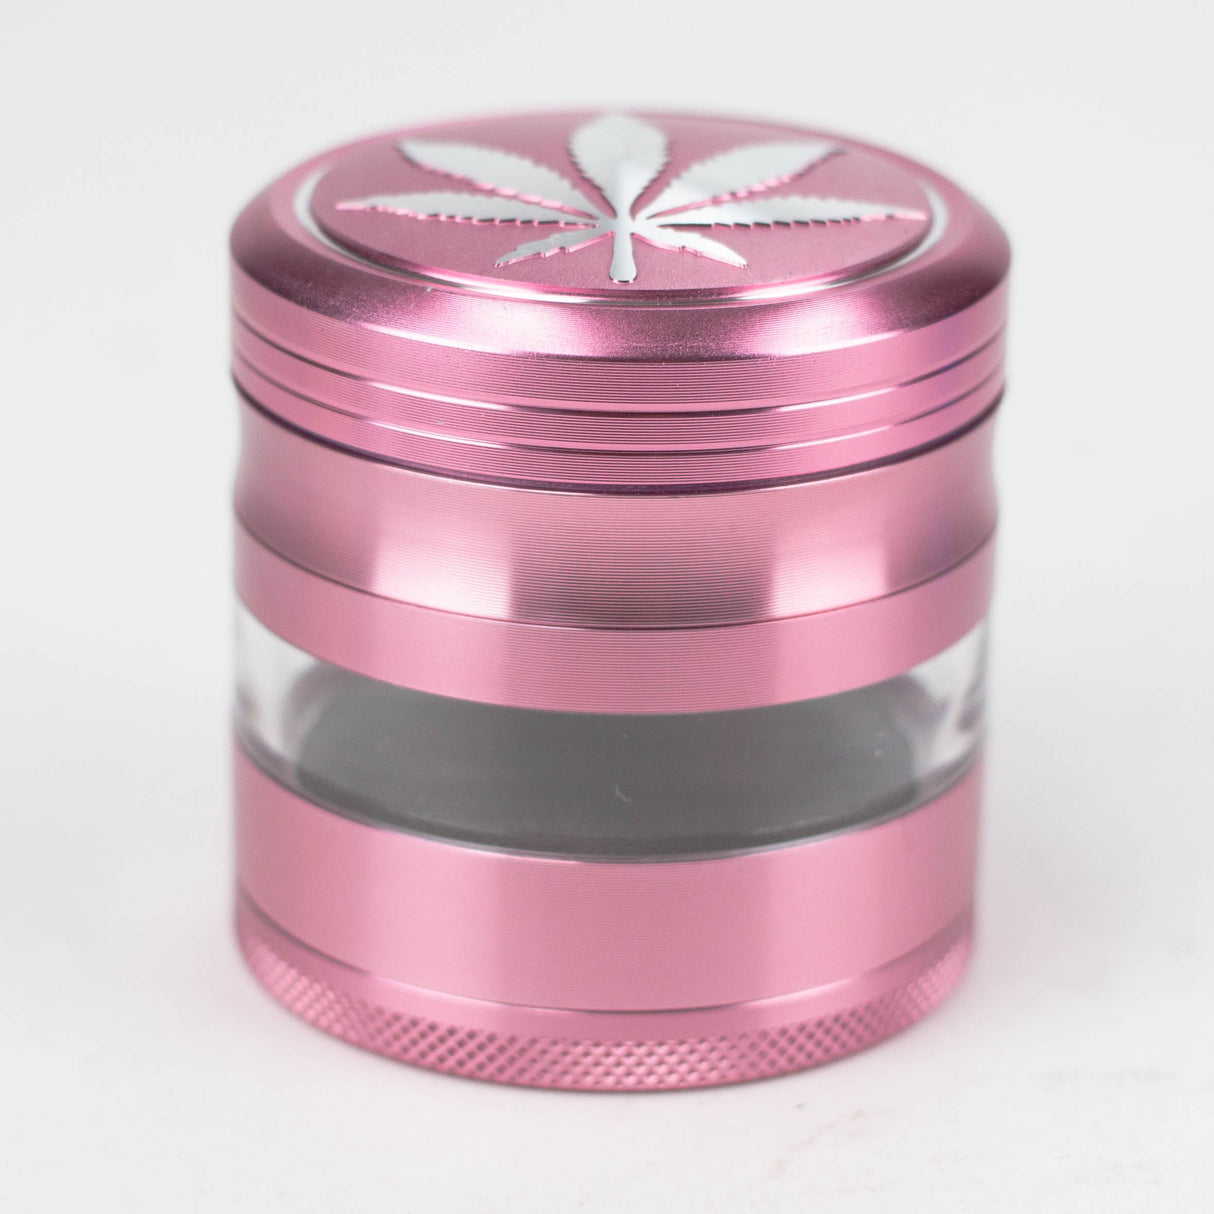 XTREME | 4 parts Aluminum herb grinder [CN6220]